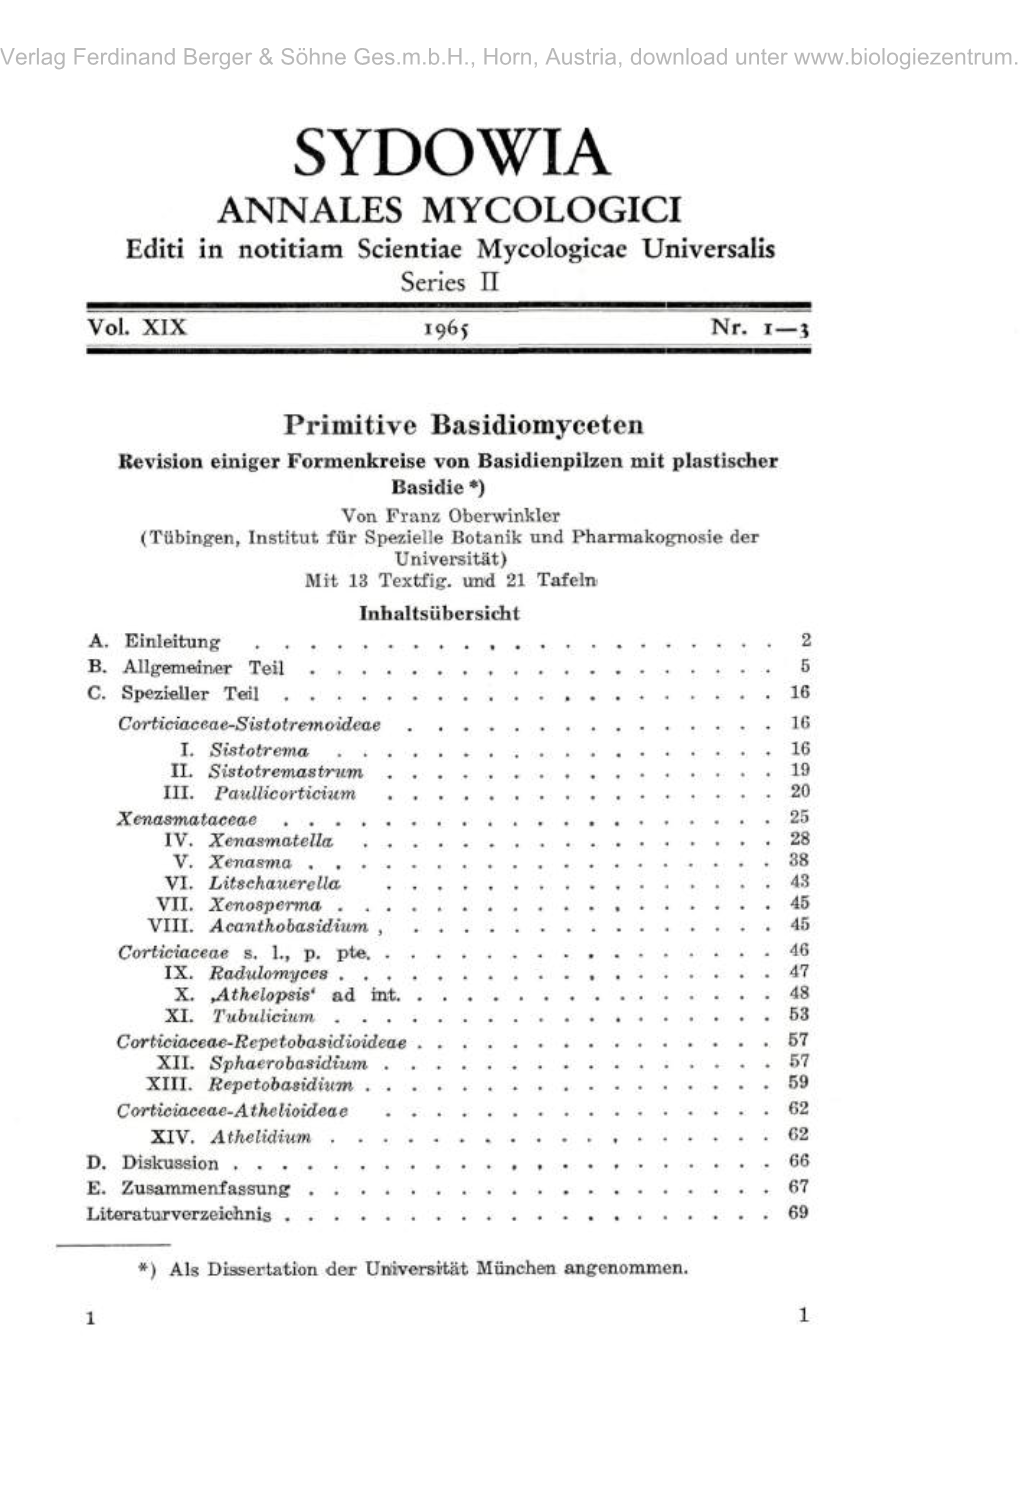 SYDOWIA ANNALES MYCOLOGICI Editi in Notitiam Scientiae Mycologicae Universalis Series II